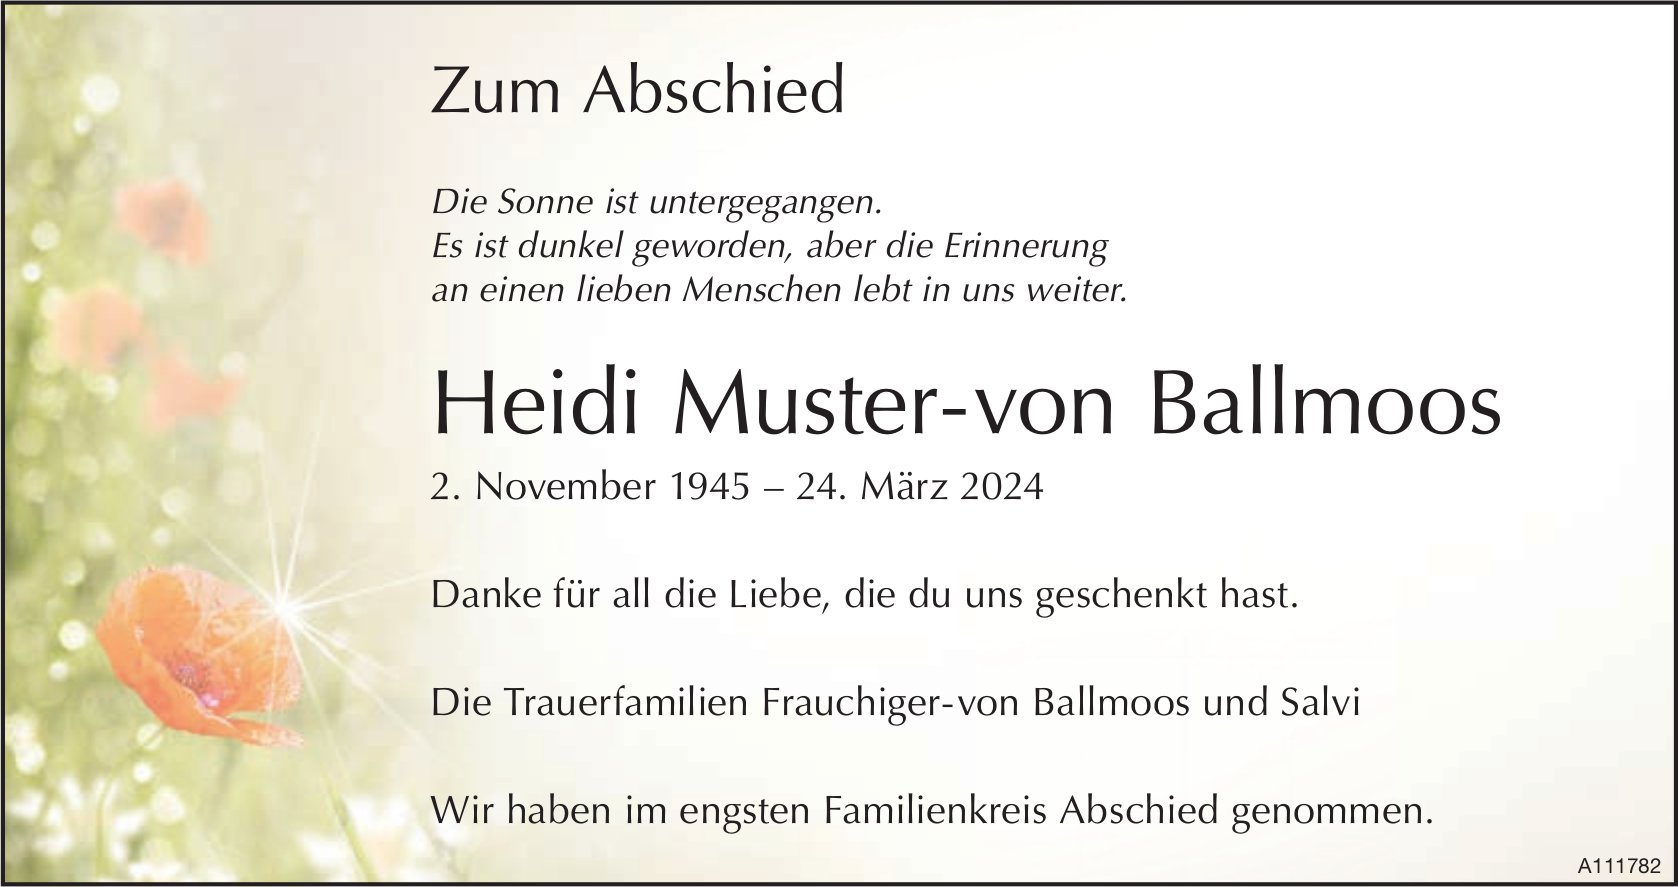 Heidi Muster-von Ballmoos, März 2024 / TA